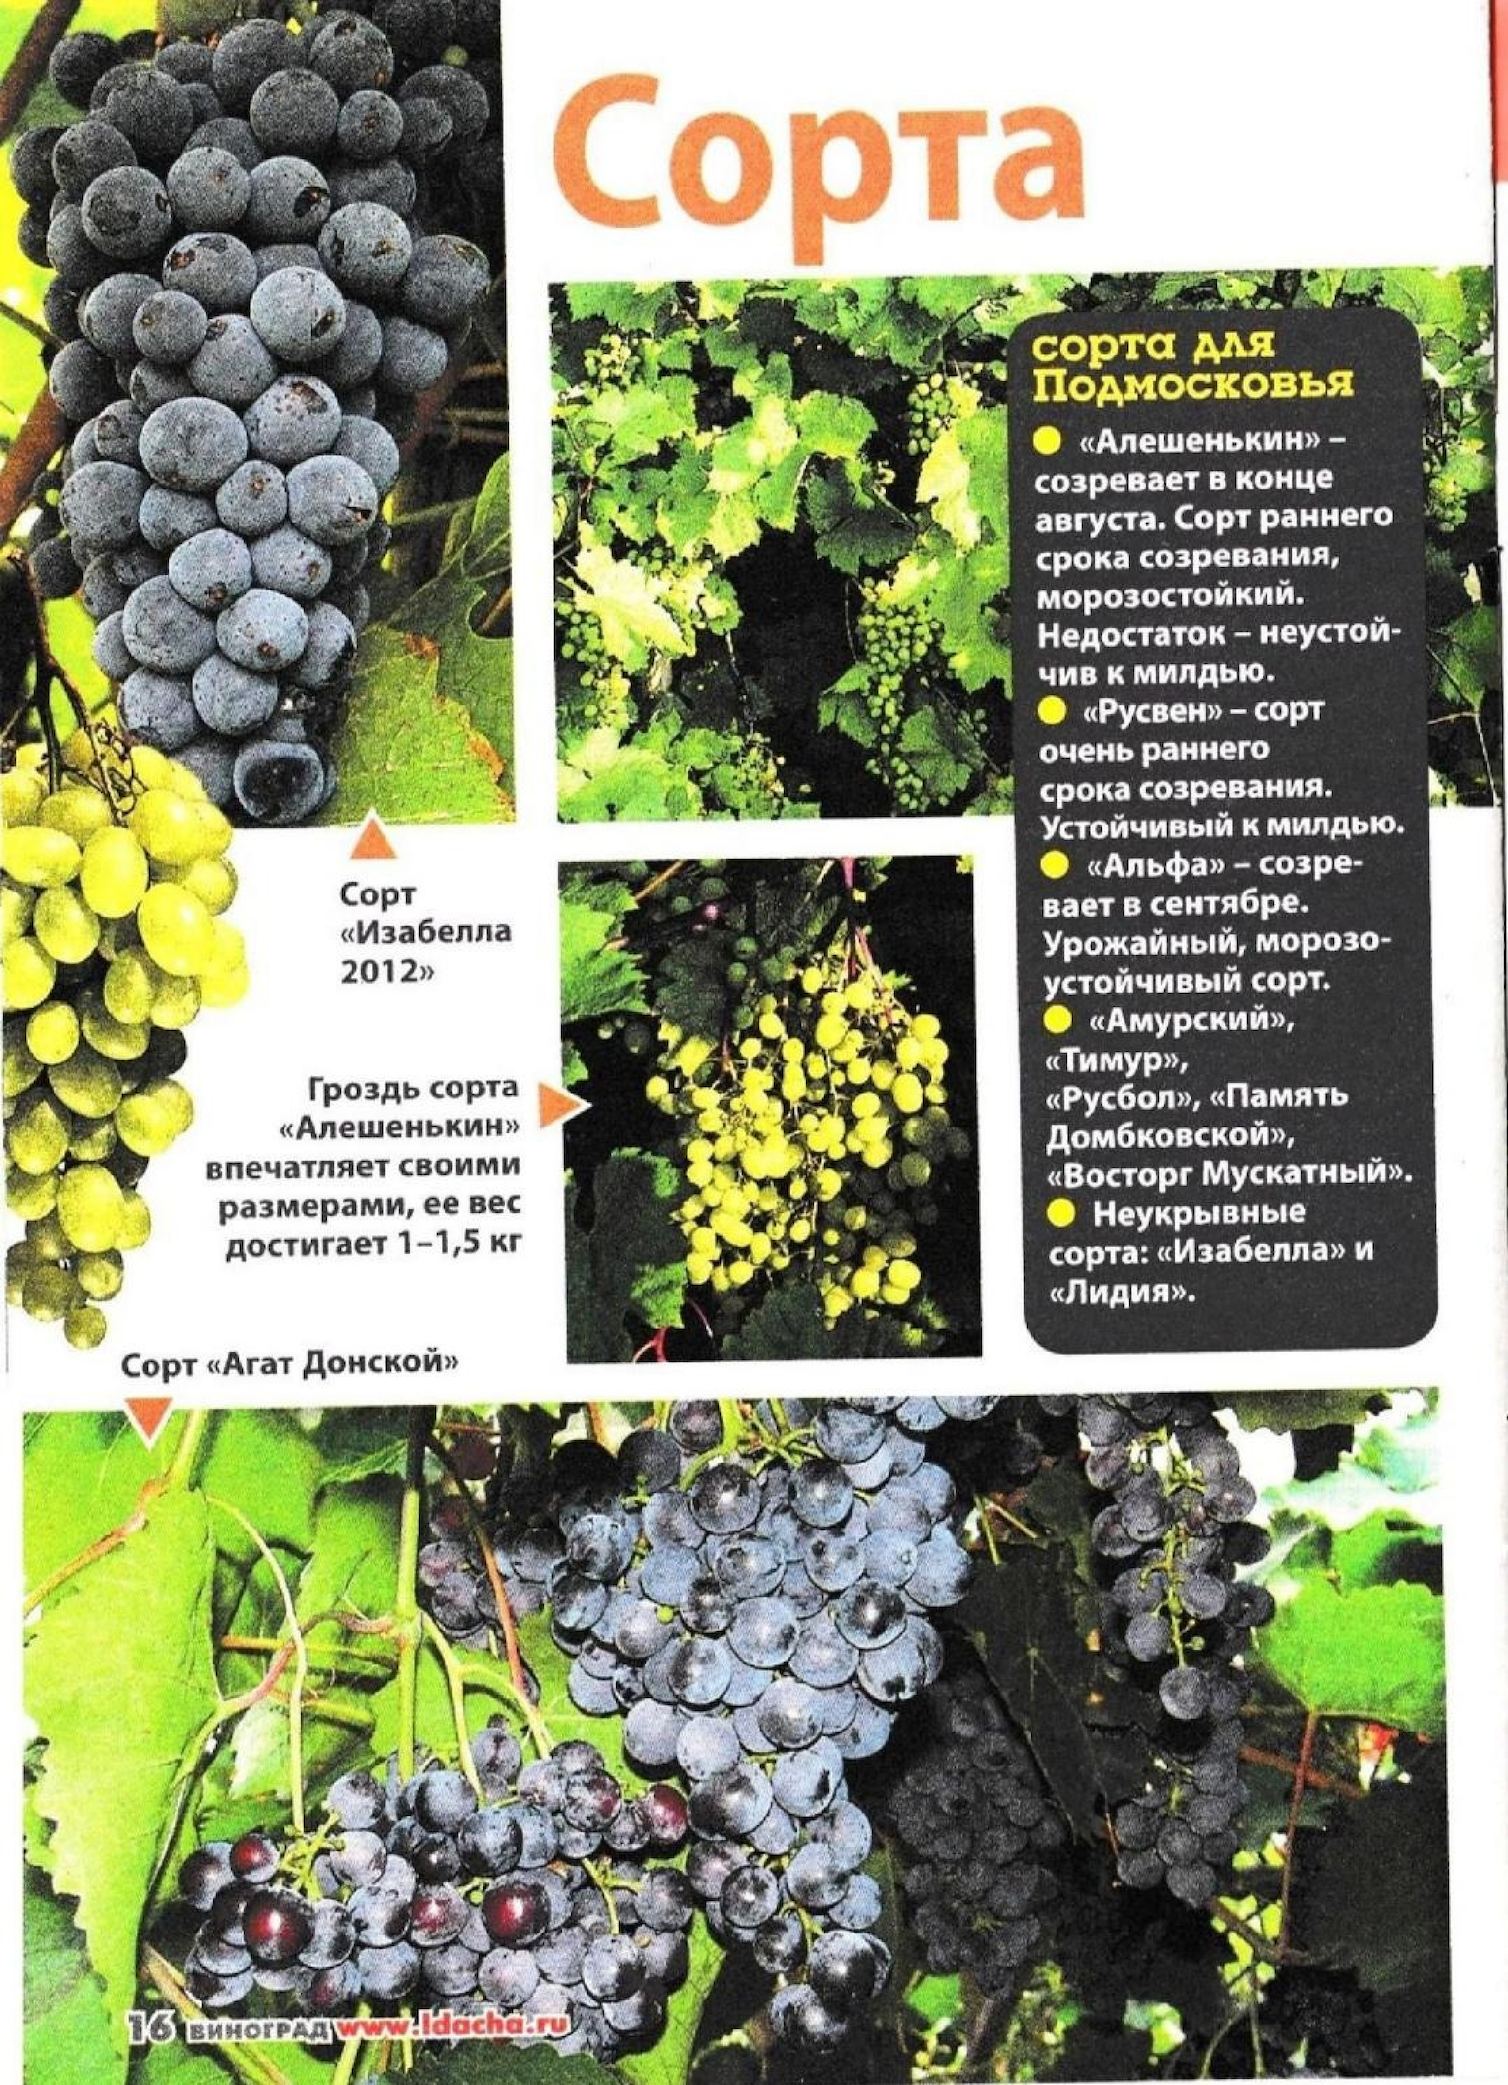 Сорт винограда рислинг (riesling): описание, вкус, отзыв о вине | я люблю вино